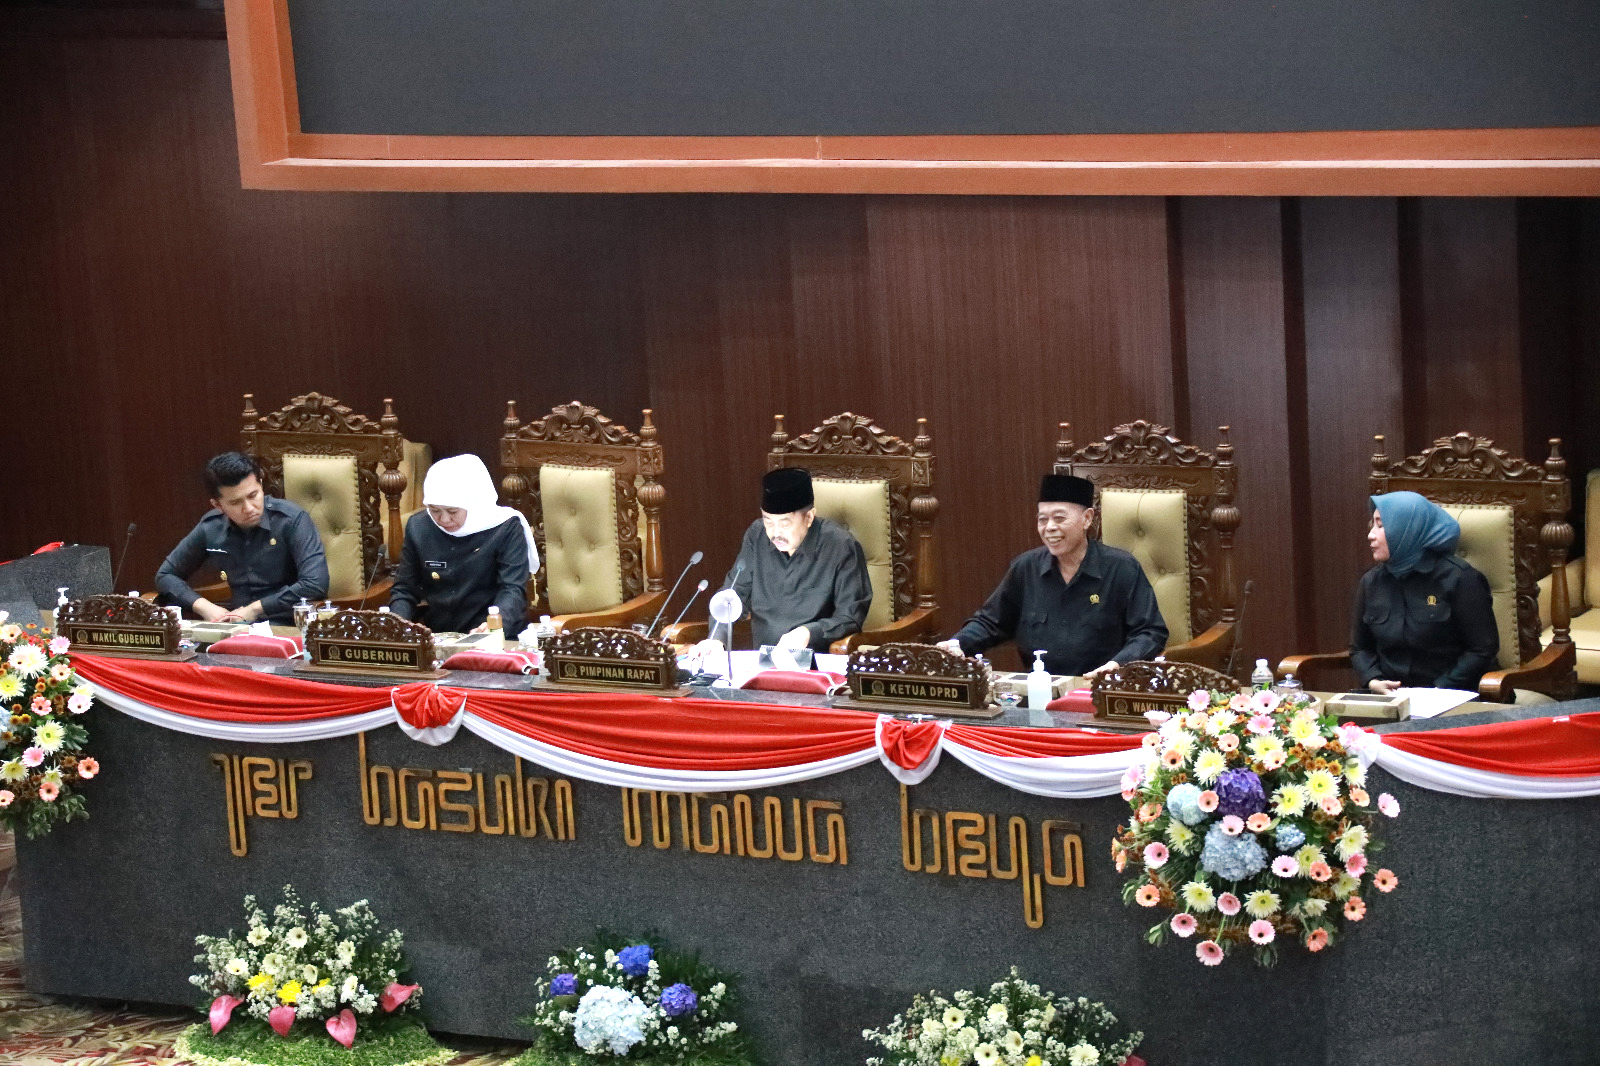 Soal Pj Gubernur Jatim, DPRD Jatim Lebih Pilih Adhy Karyono Ketimbang Toni Harmanto